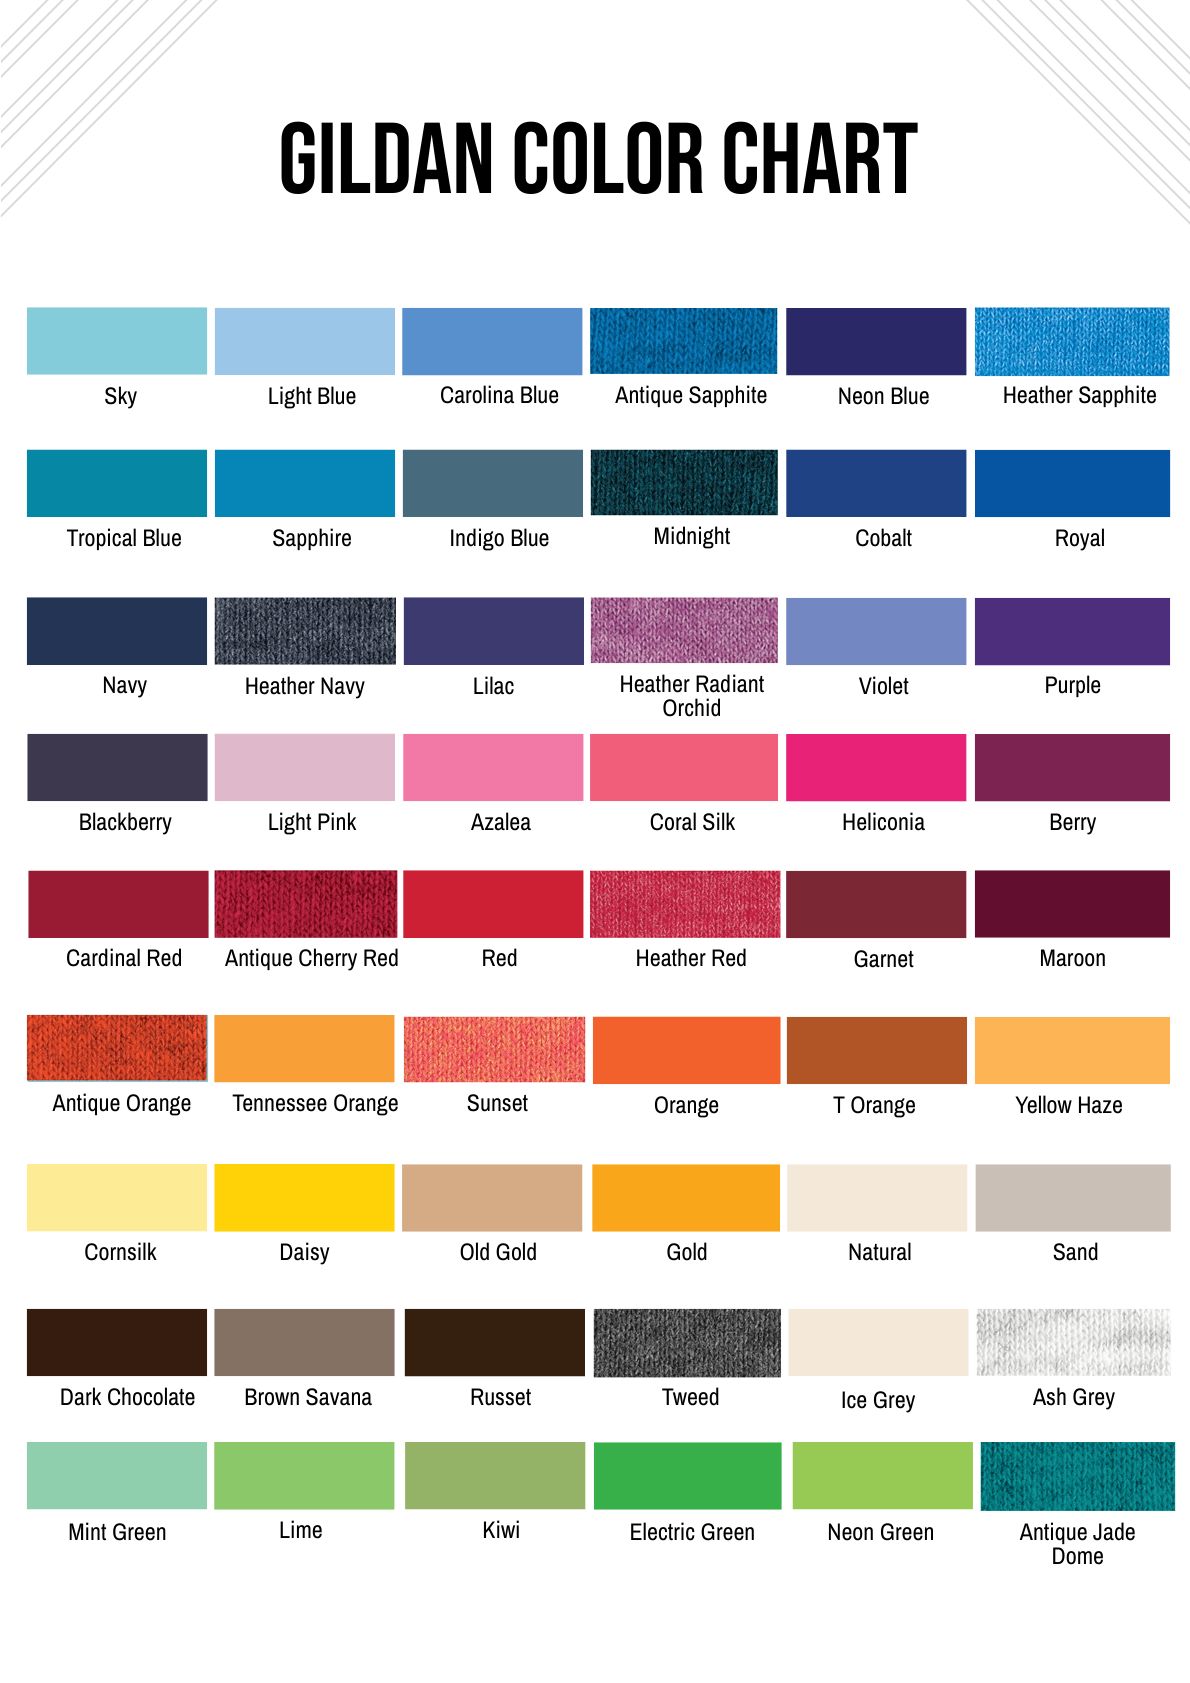 Free Gildan 64000 Color Chart - Download in Word, PDF, Illustrator, PSD ...